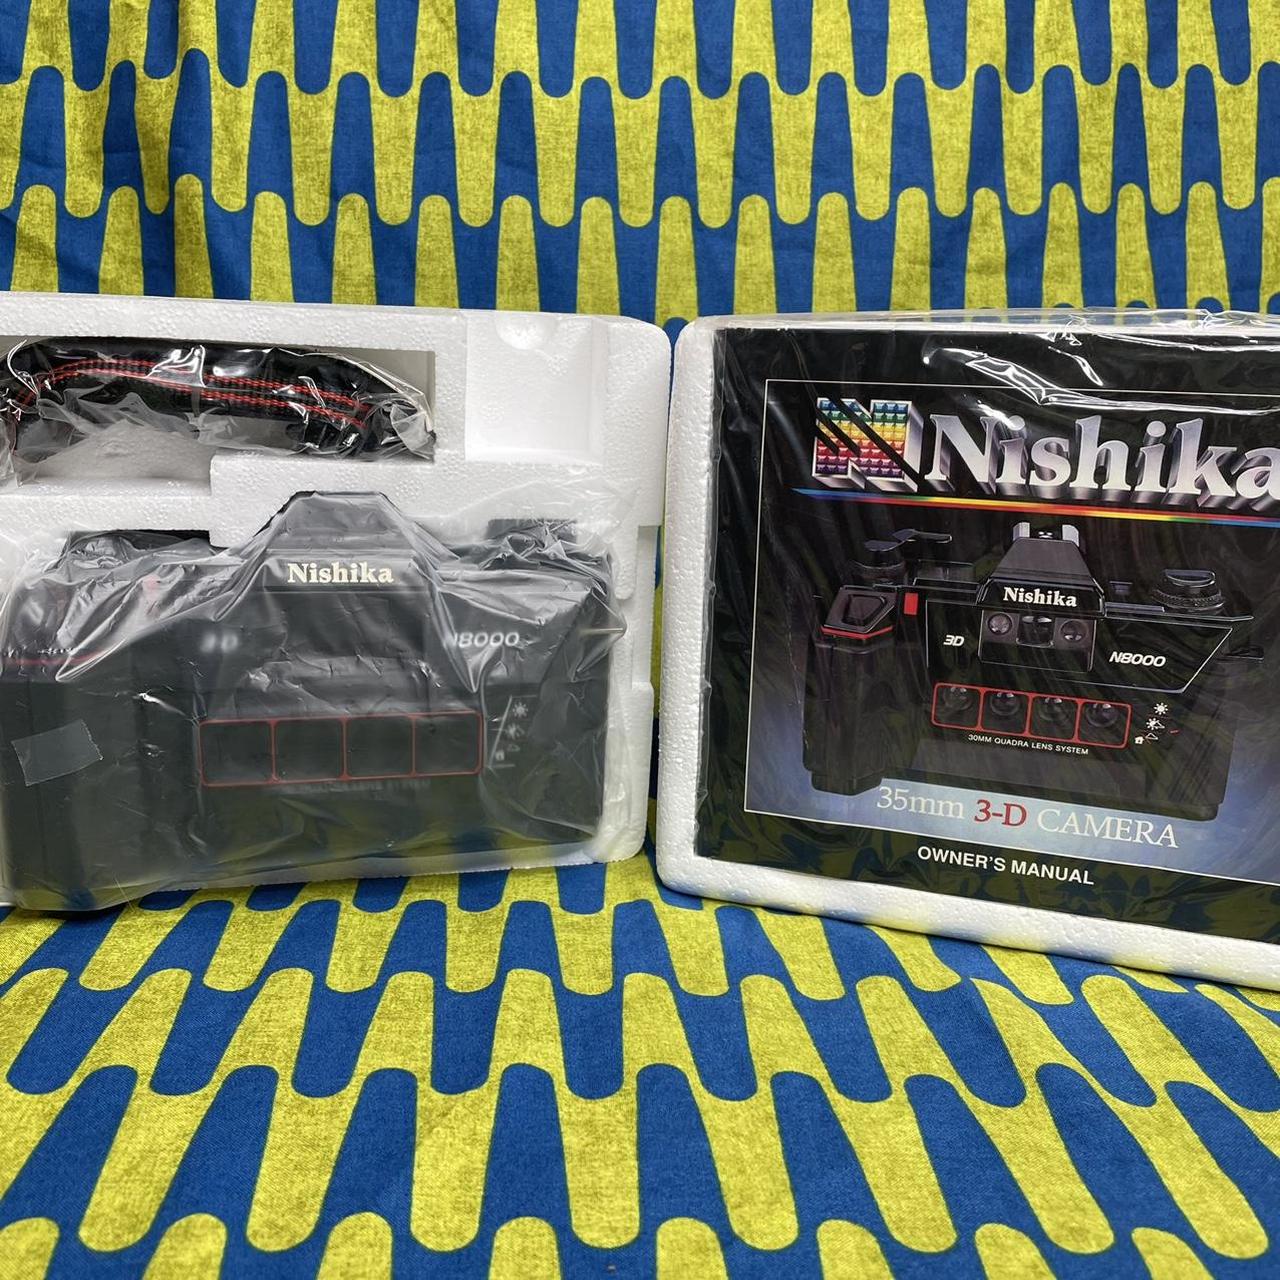 Product Image 2 - Nishika N8000! Film tested! Comes